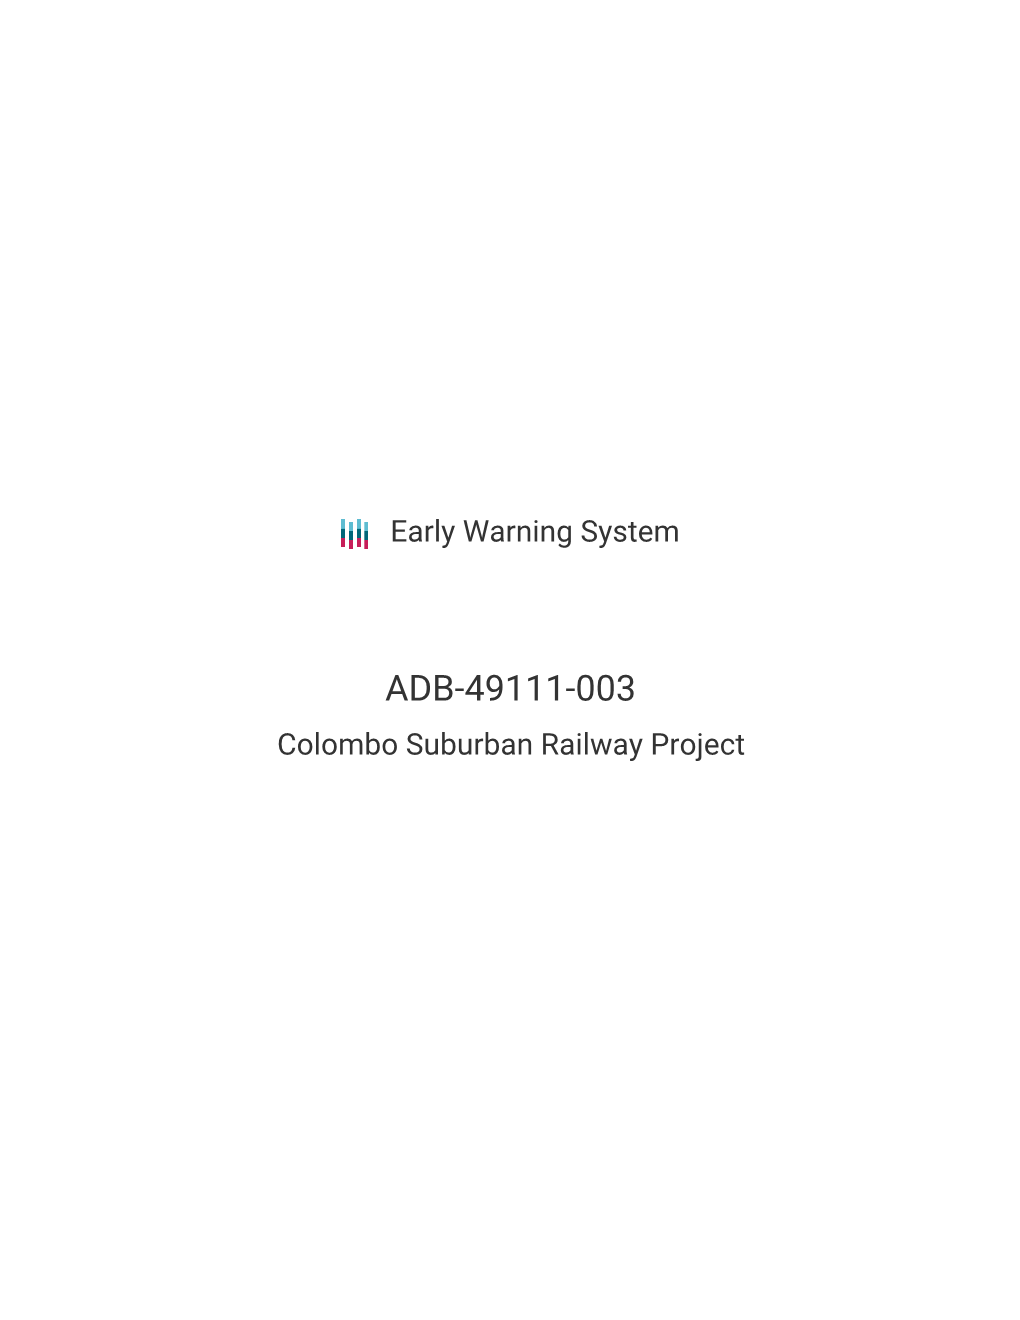 Colombo Suburban Railway Project Early Warning System ADB-49111-003 Colombo Suburban Railway Project